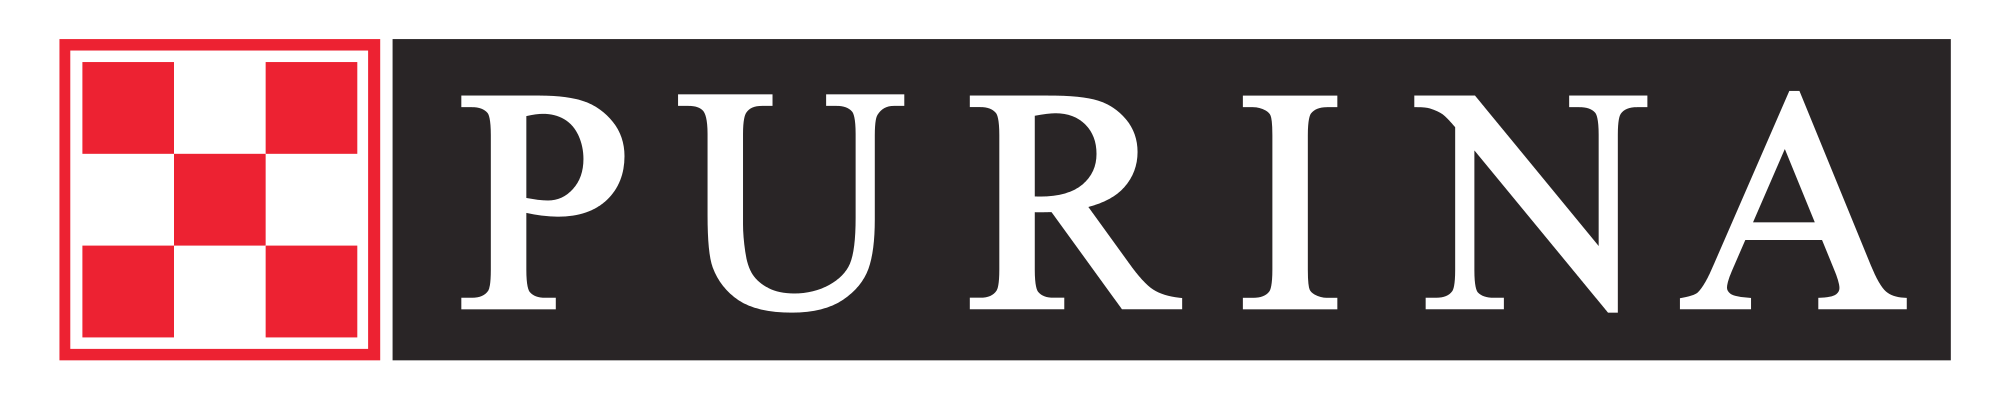 Purina-logo.svg.png